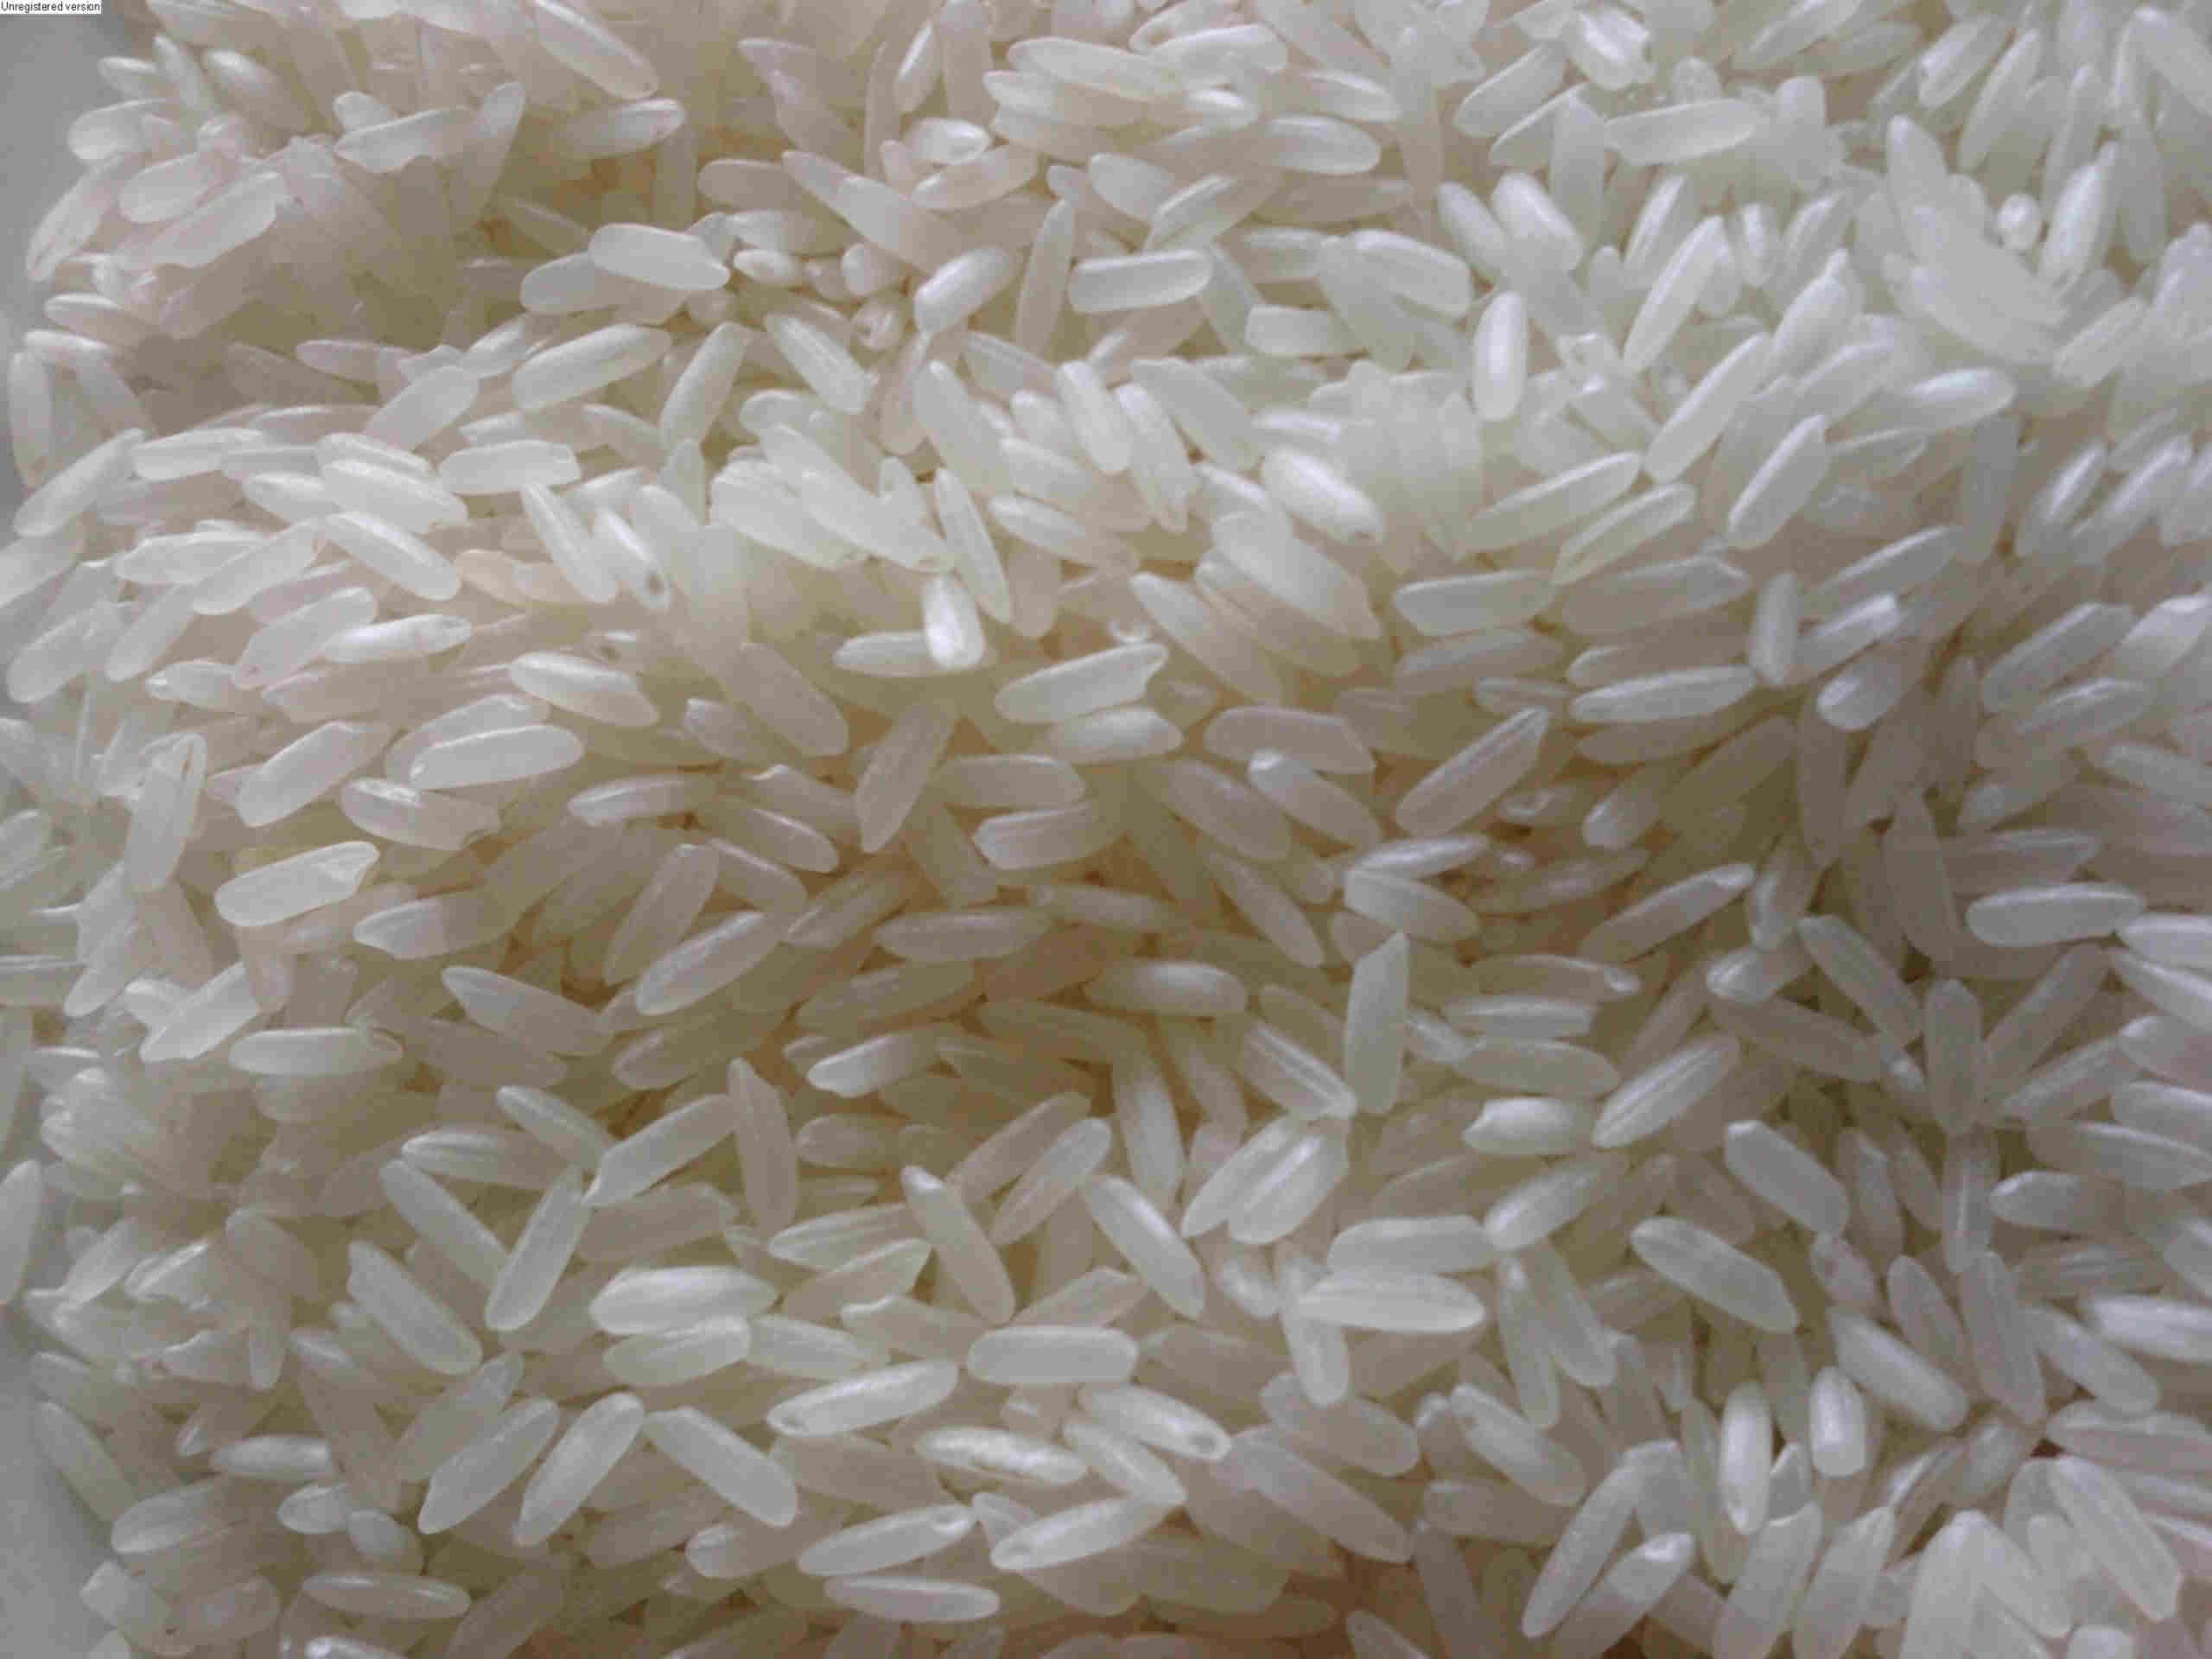 long grain white rice